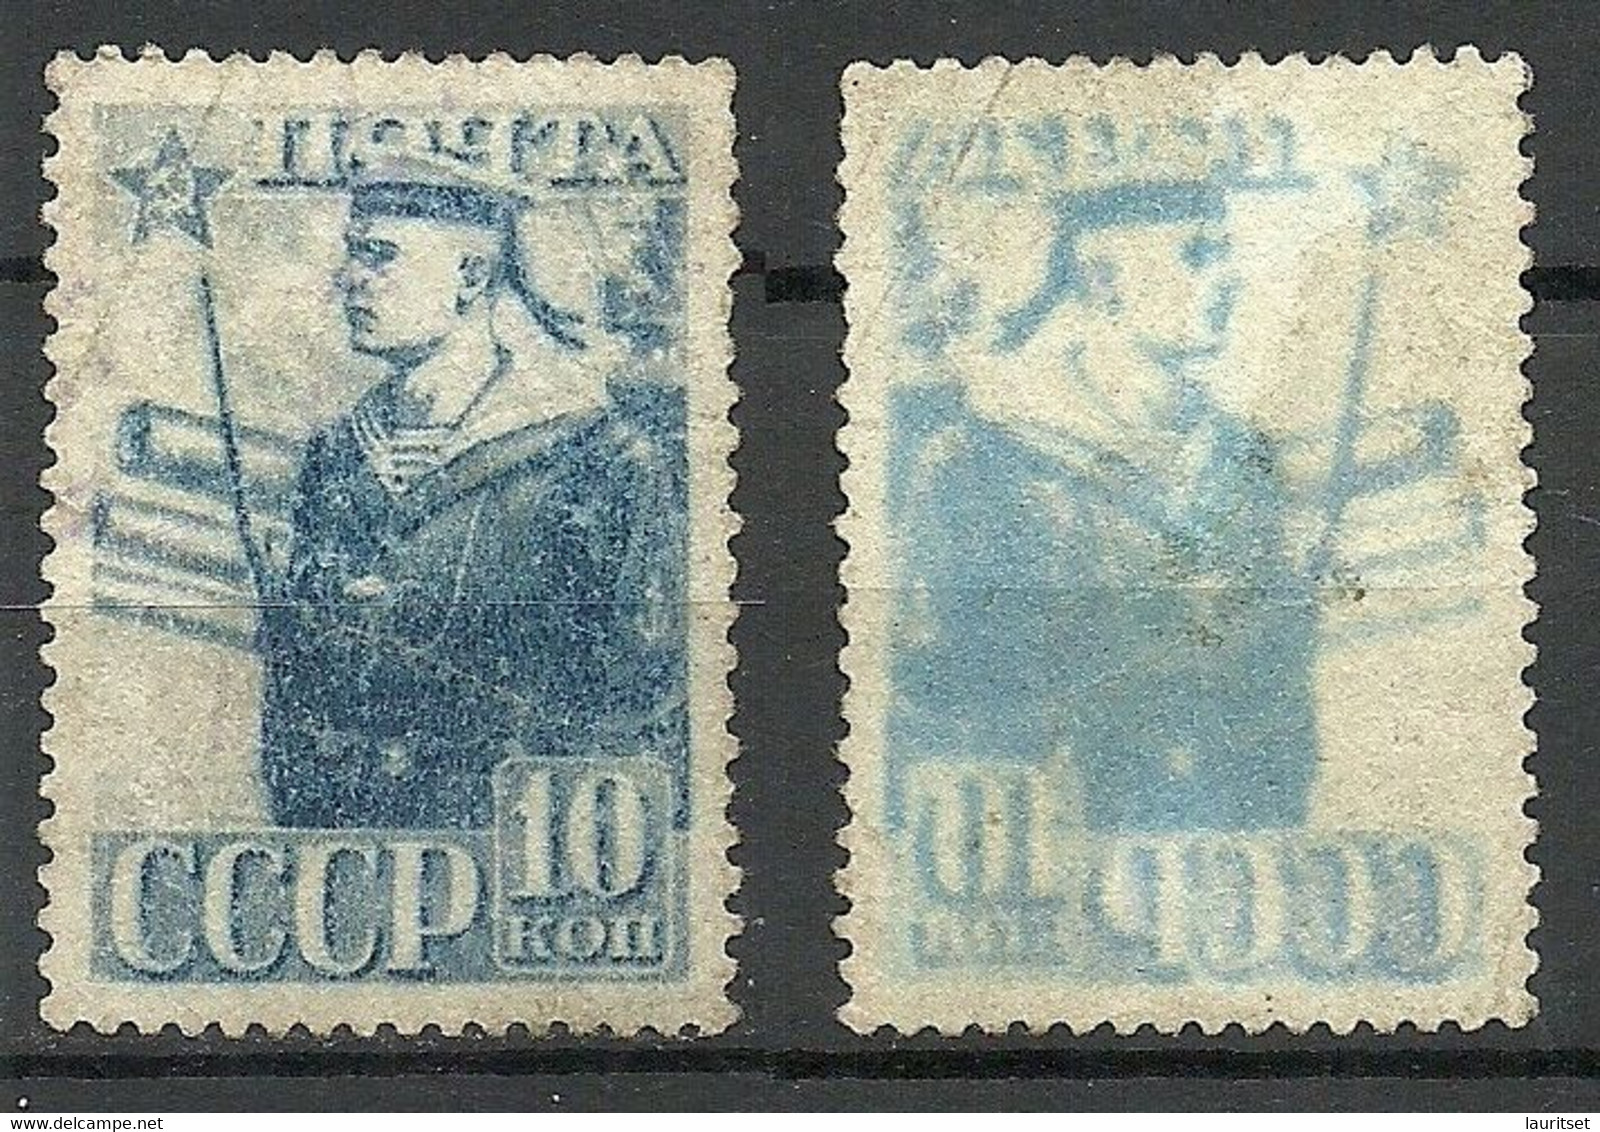 RUSSLAND RUSSIA 1941 Michel 794 C O Set Off Abklatsch Variety - Errors & Oddities